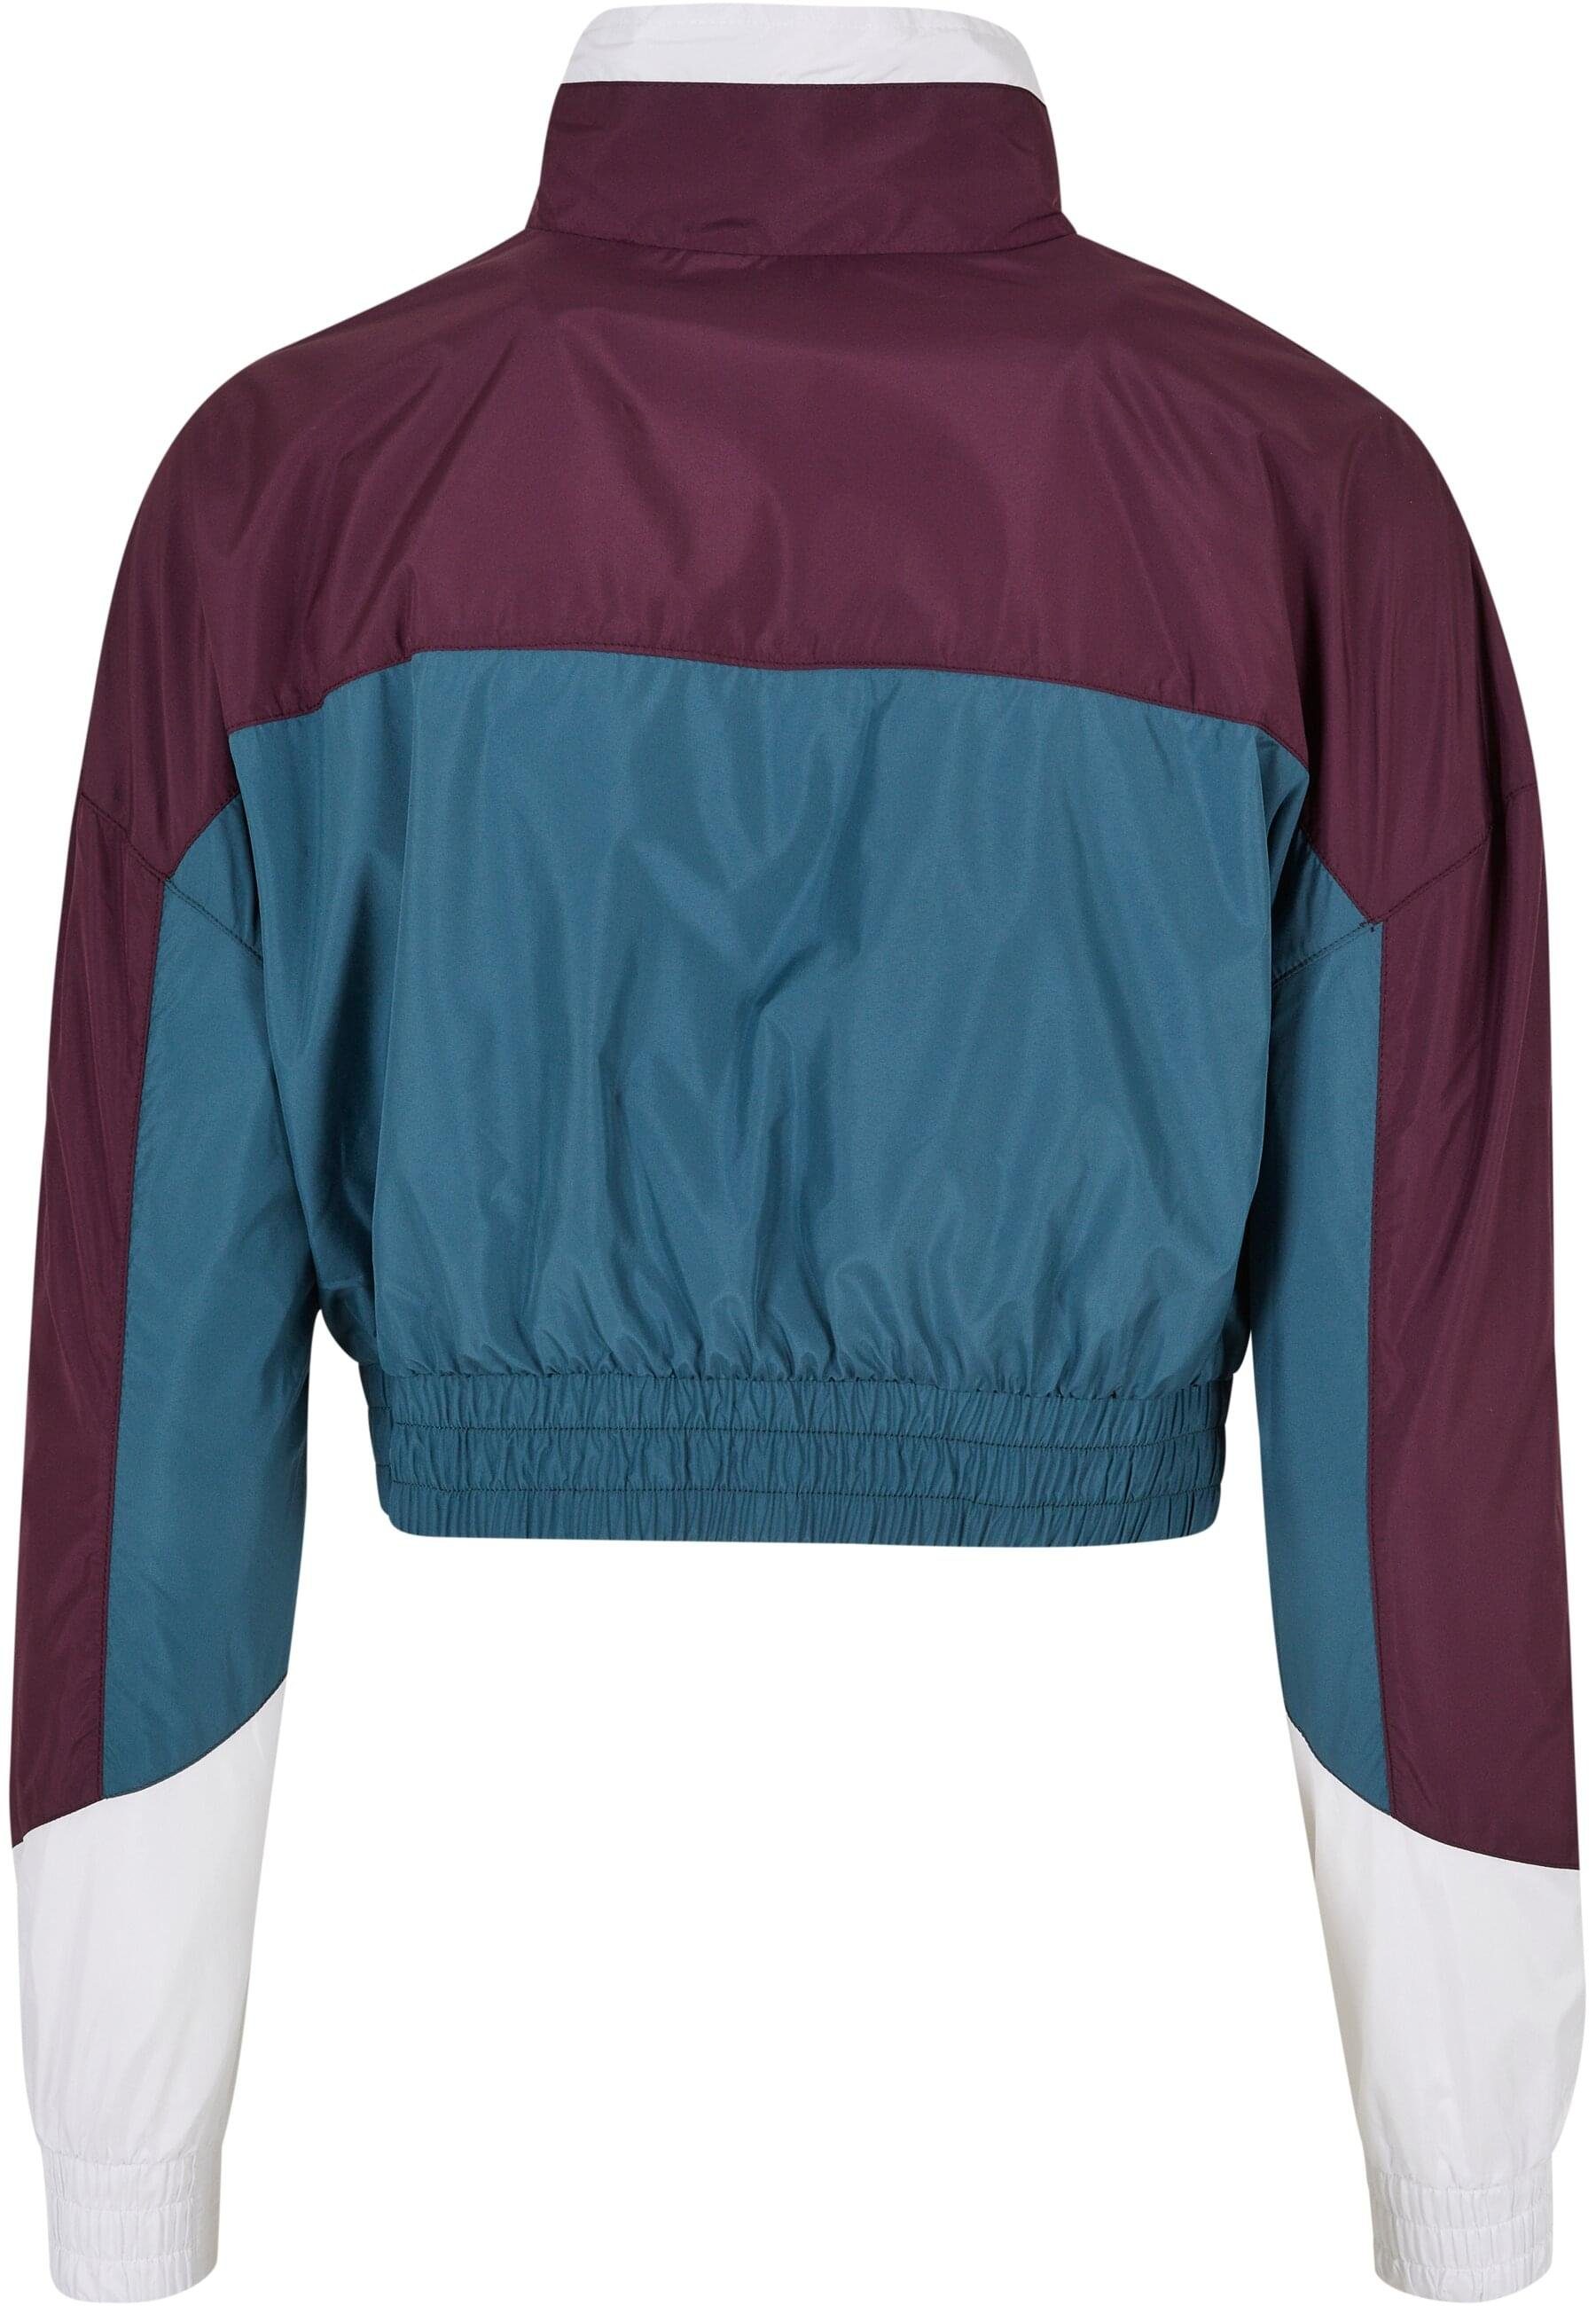 (1-St) Starter Damen Colorblock Label Pull Outdoorjacke darkviolet/teal Starter Black Jacket Ladies Over